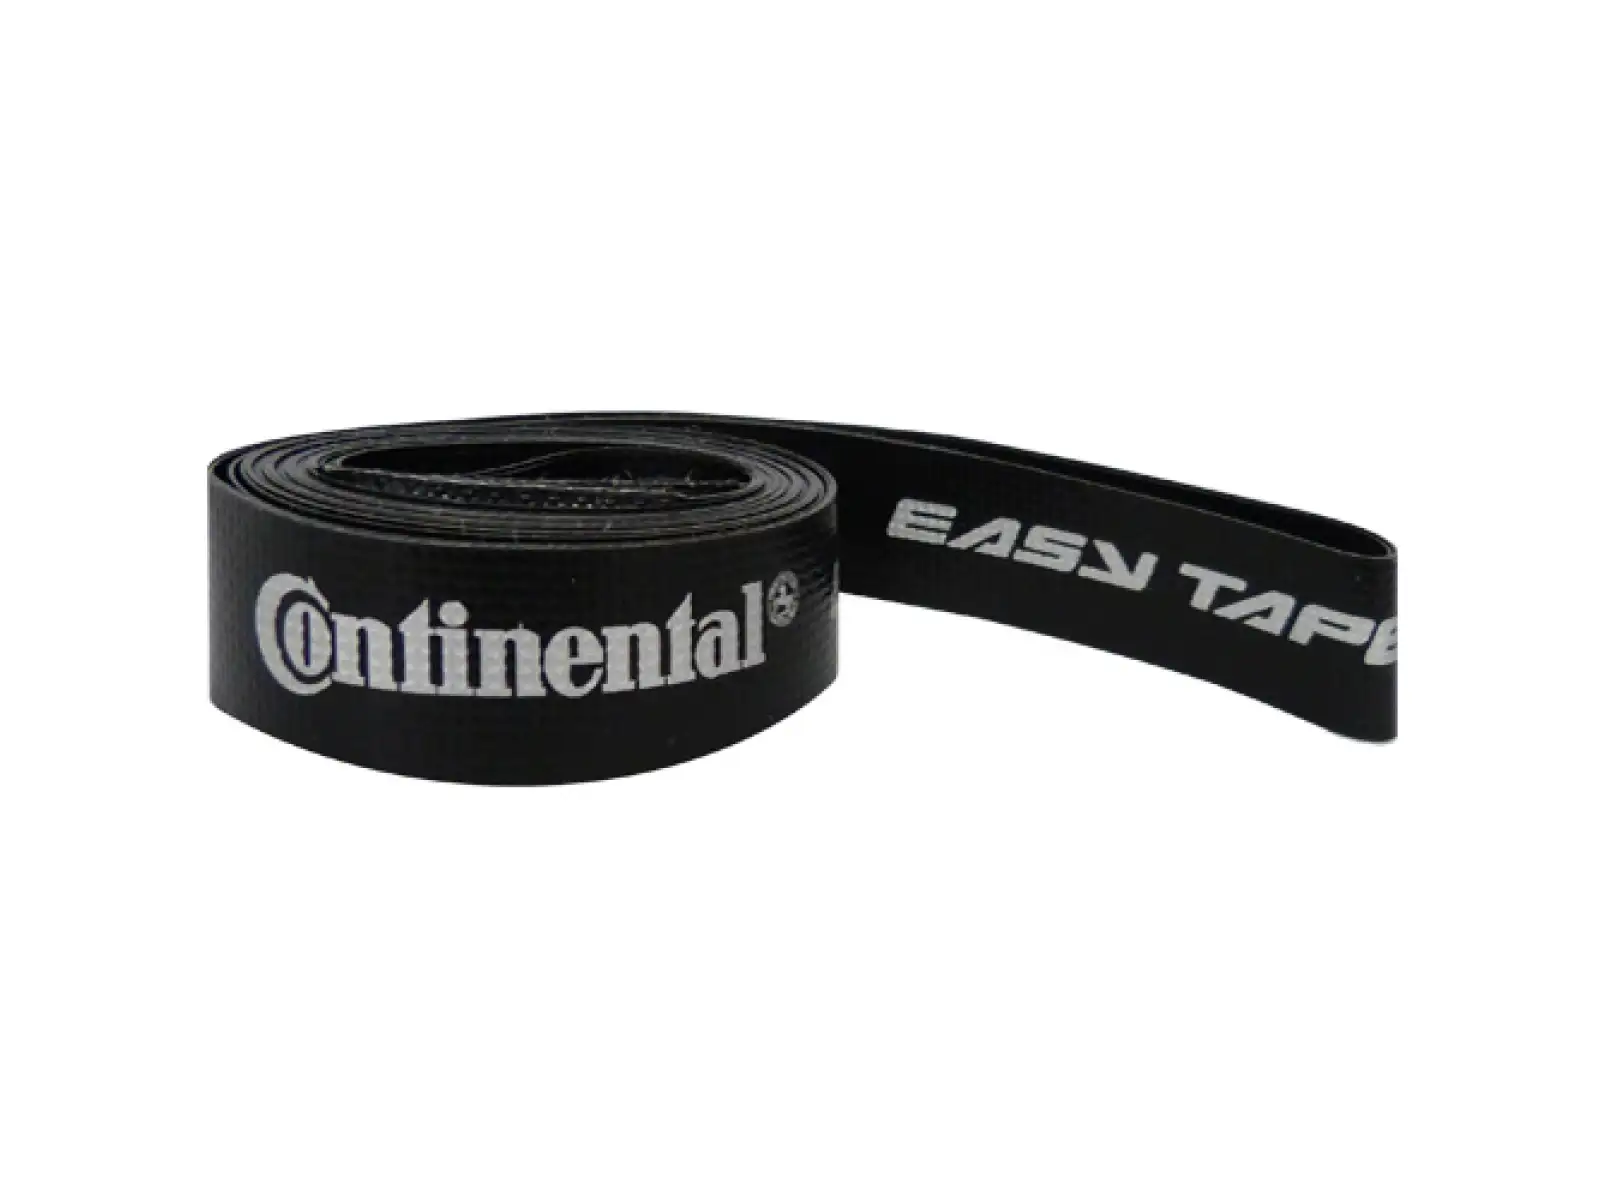 Páska na ráfiky Continental EasyTape 18-559 1 kus